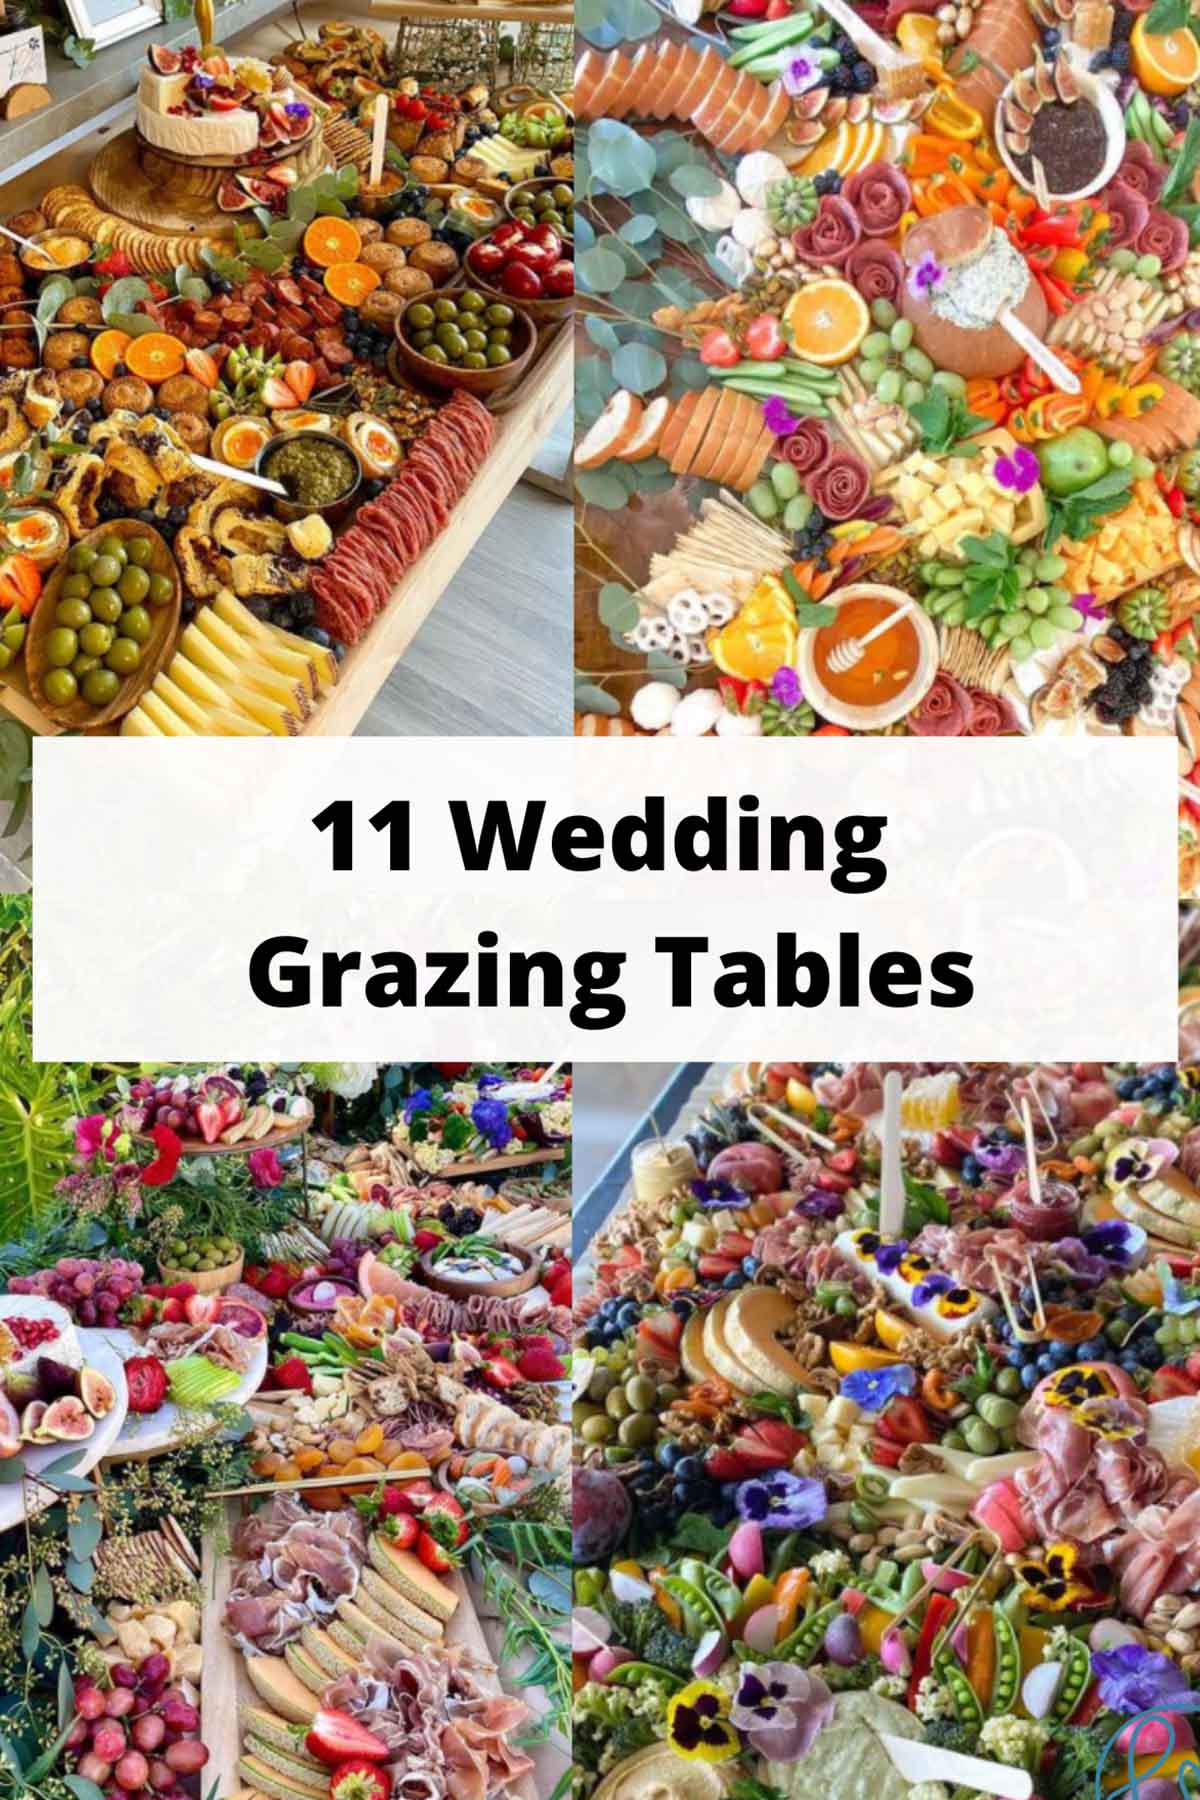 11 wedding grazing tables.